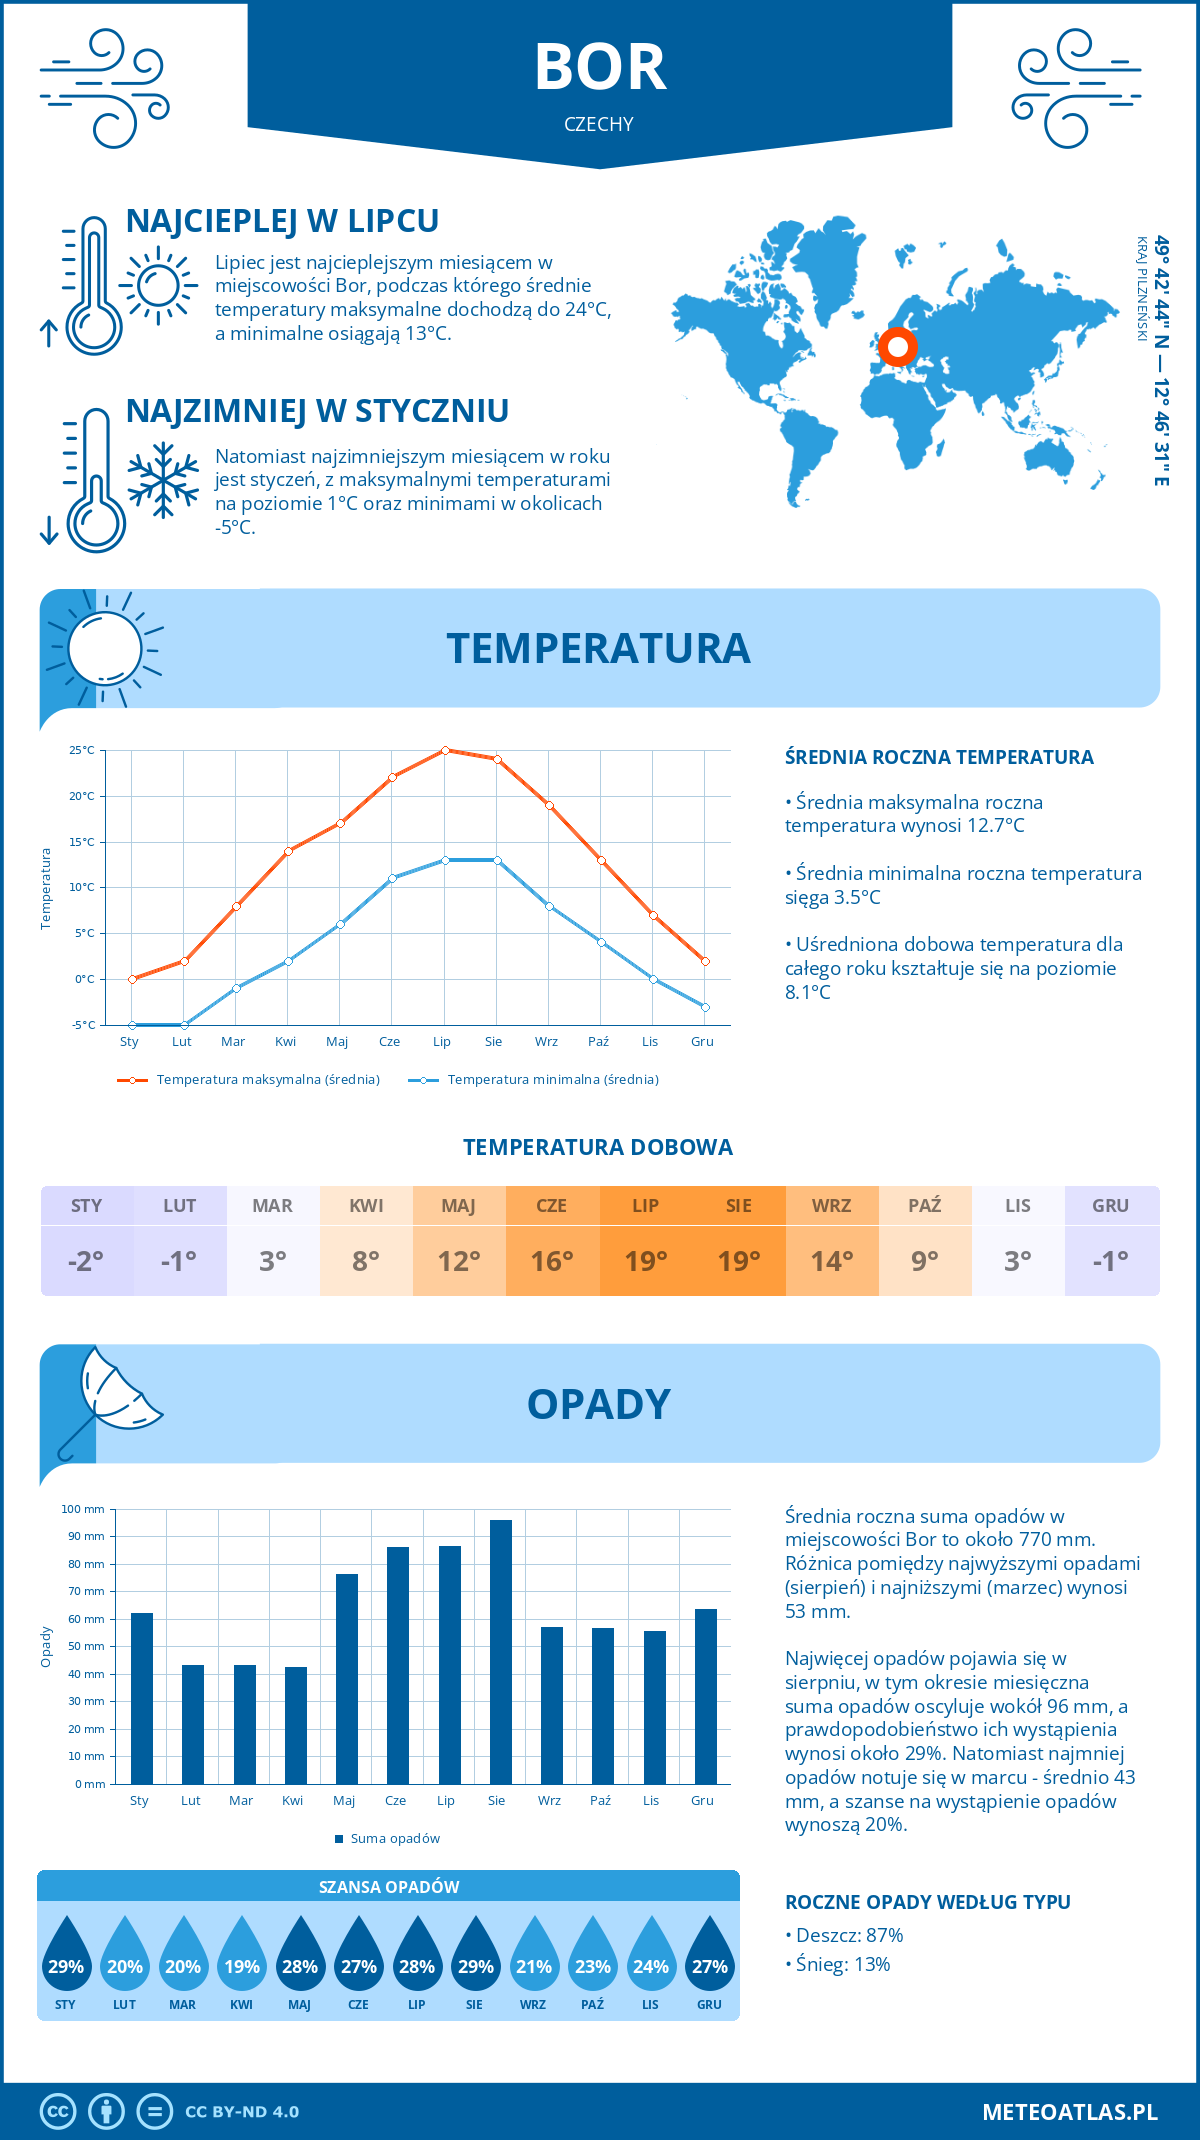 Pogoda Bor (Czechy). Temperatura oraz opady.